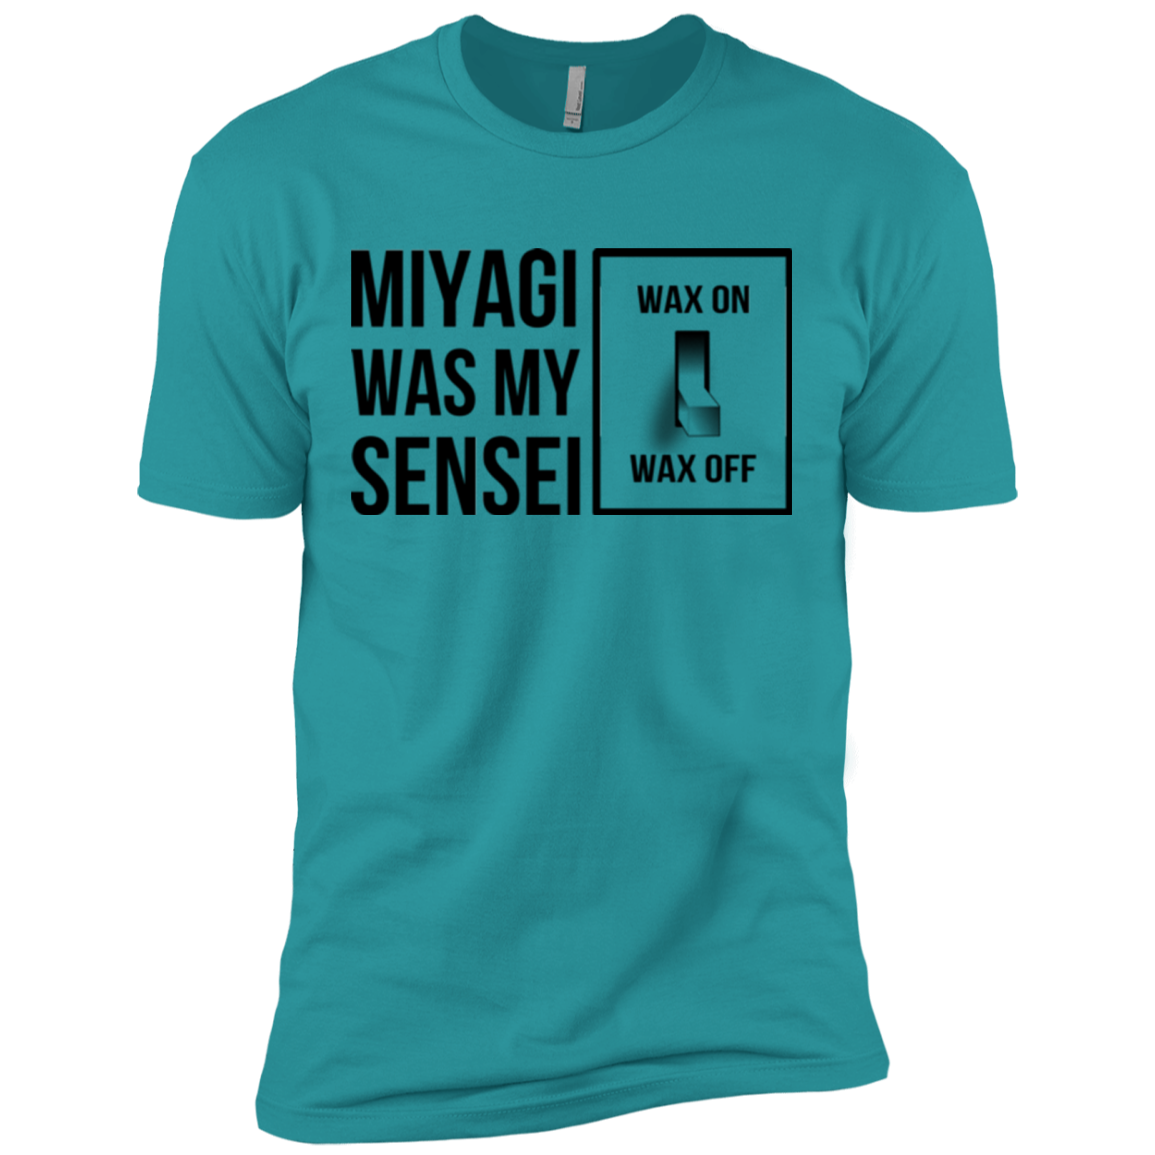 My Sensei Men's Premium T-Shirt